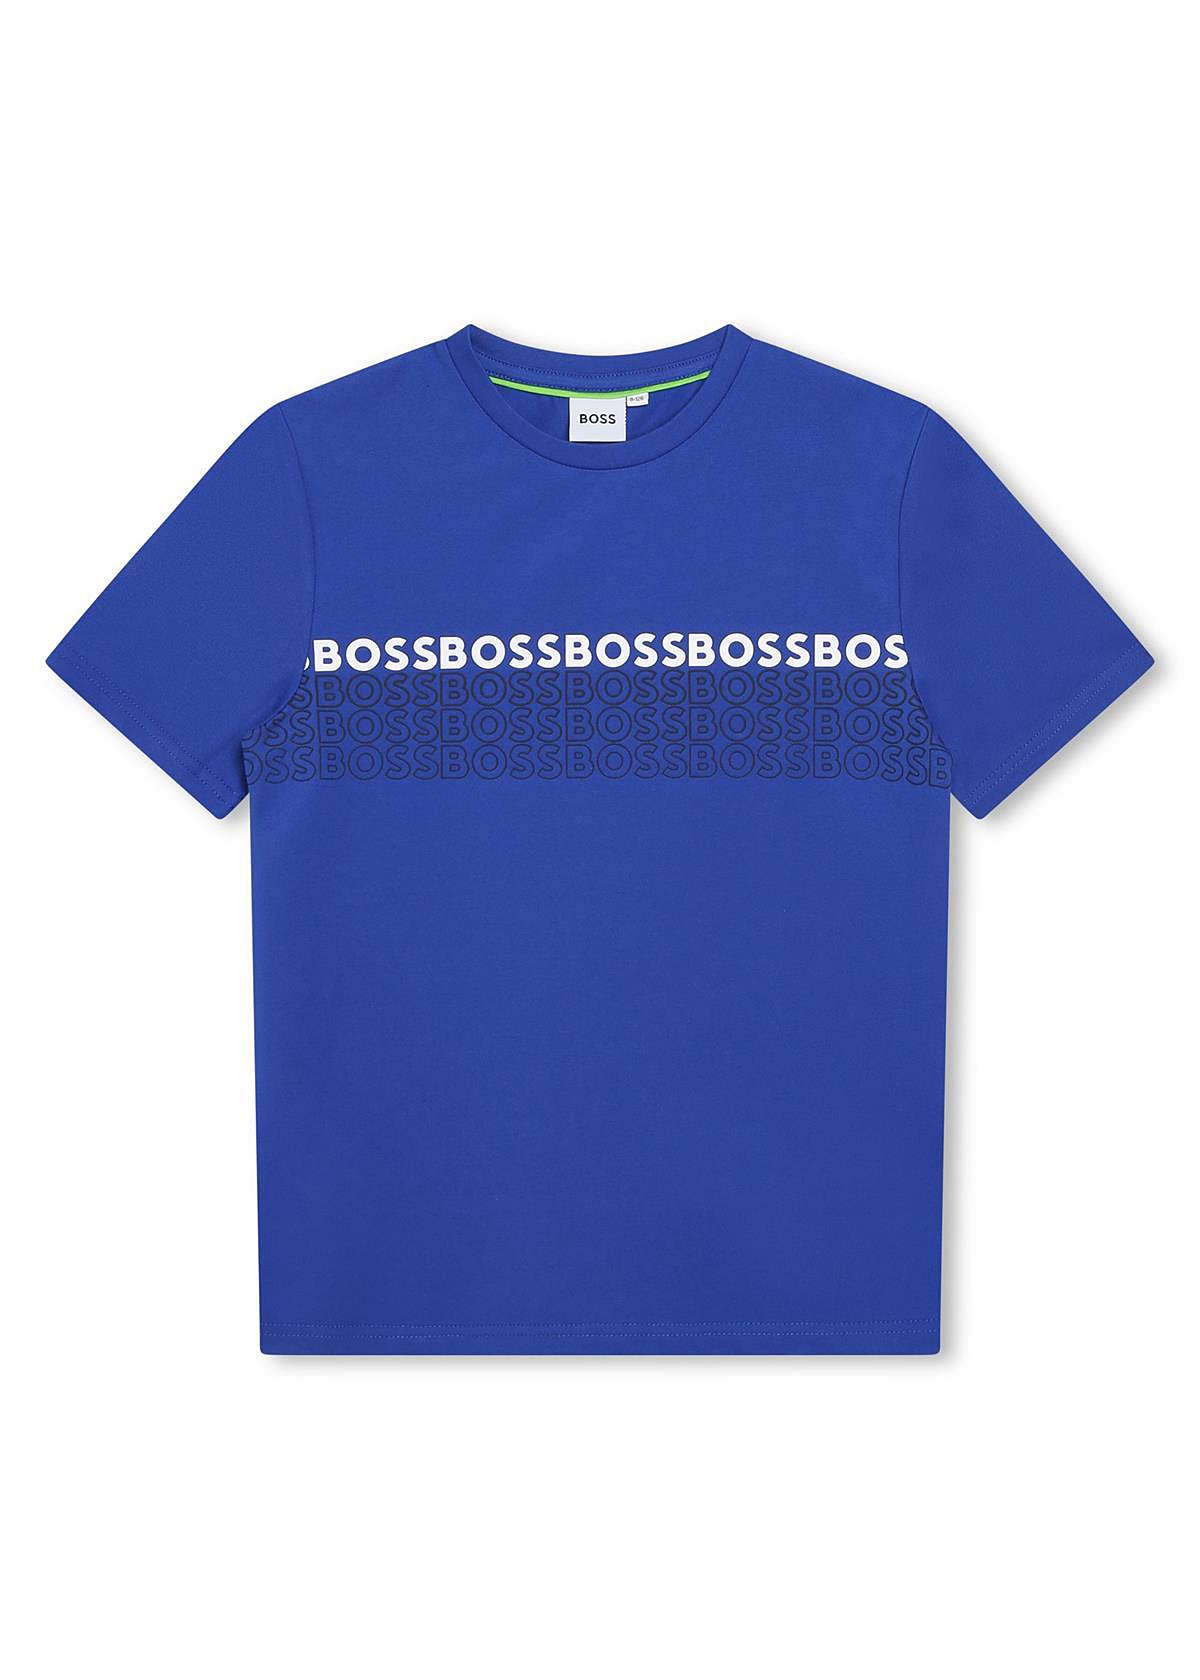 BOSS J25O06-79B T-shirt chłopiec kolor szafir